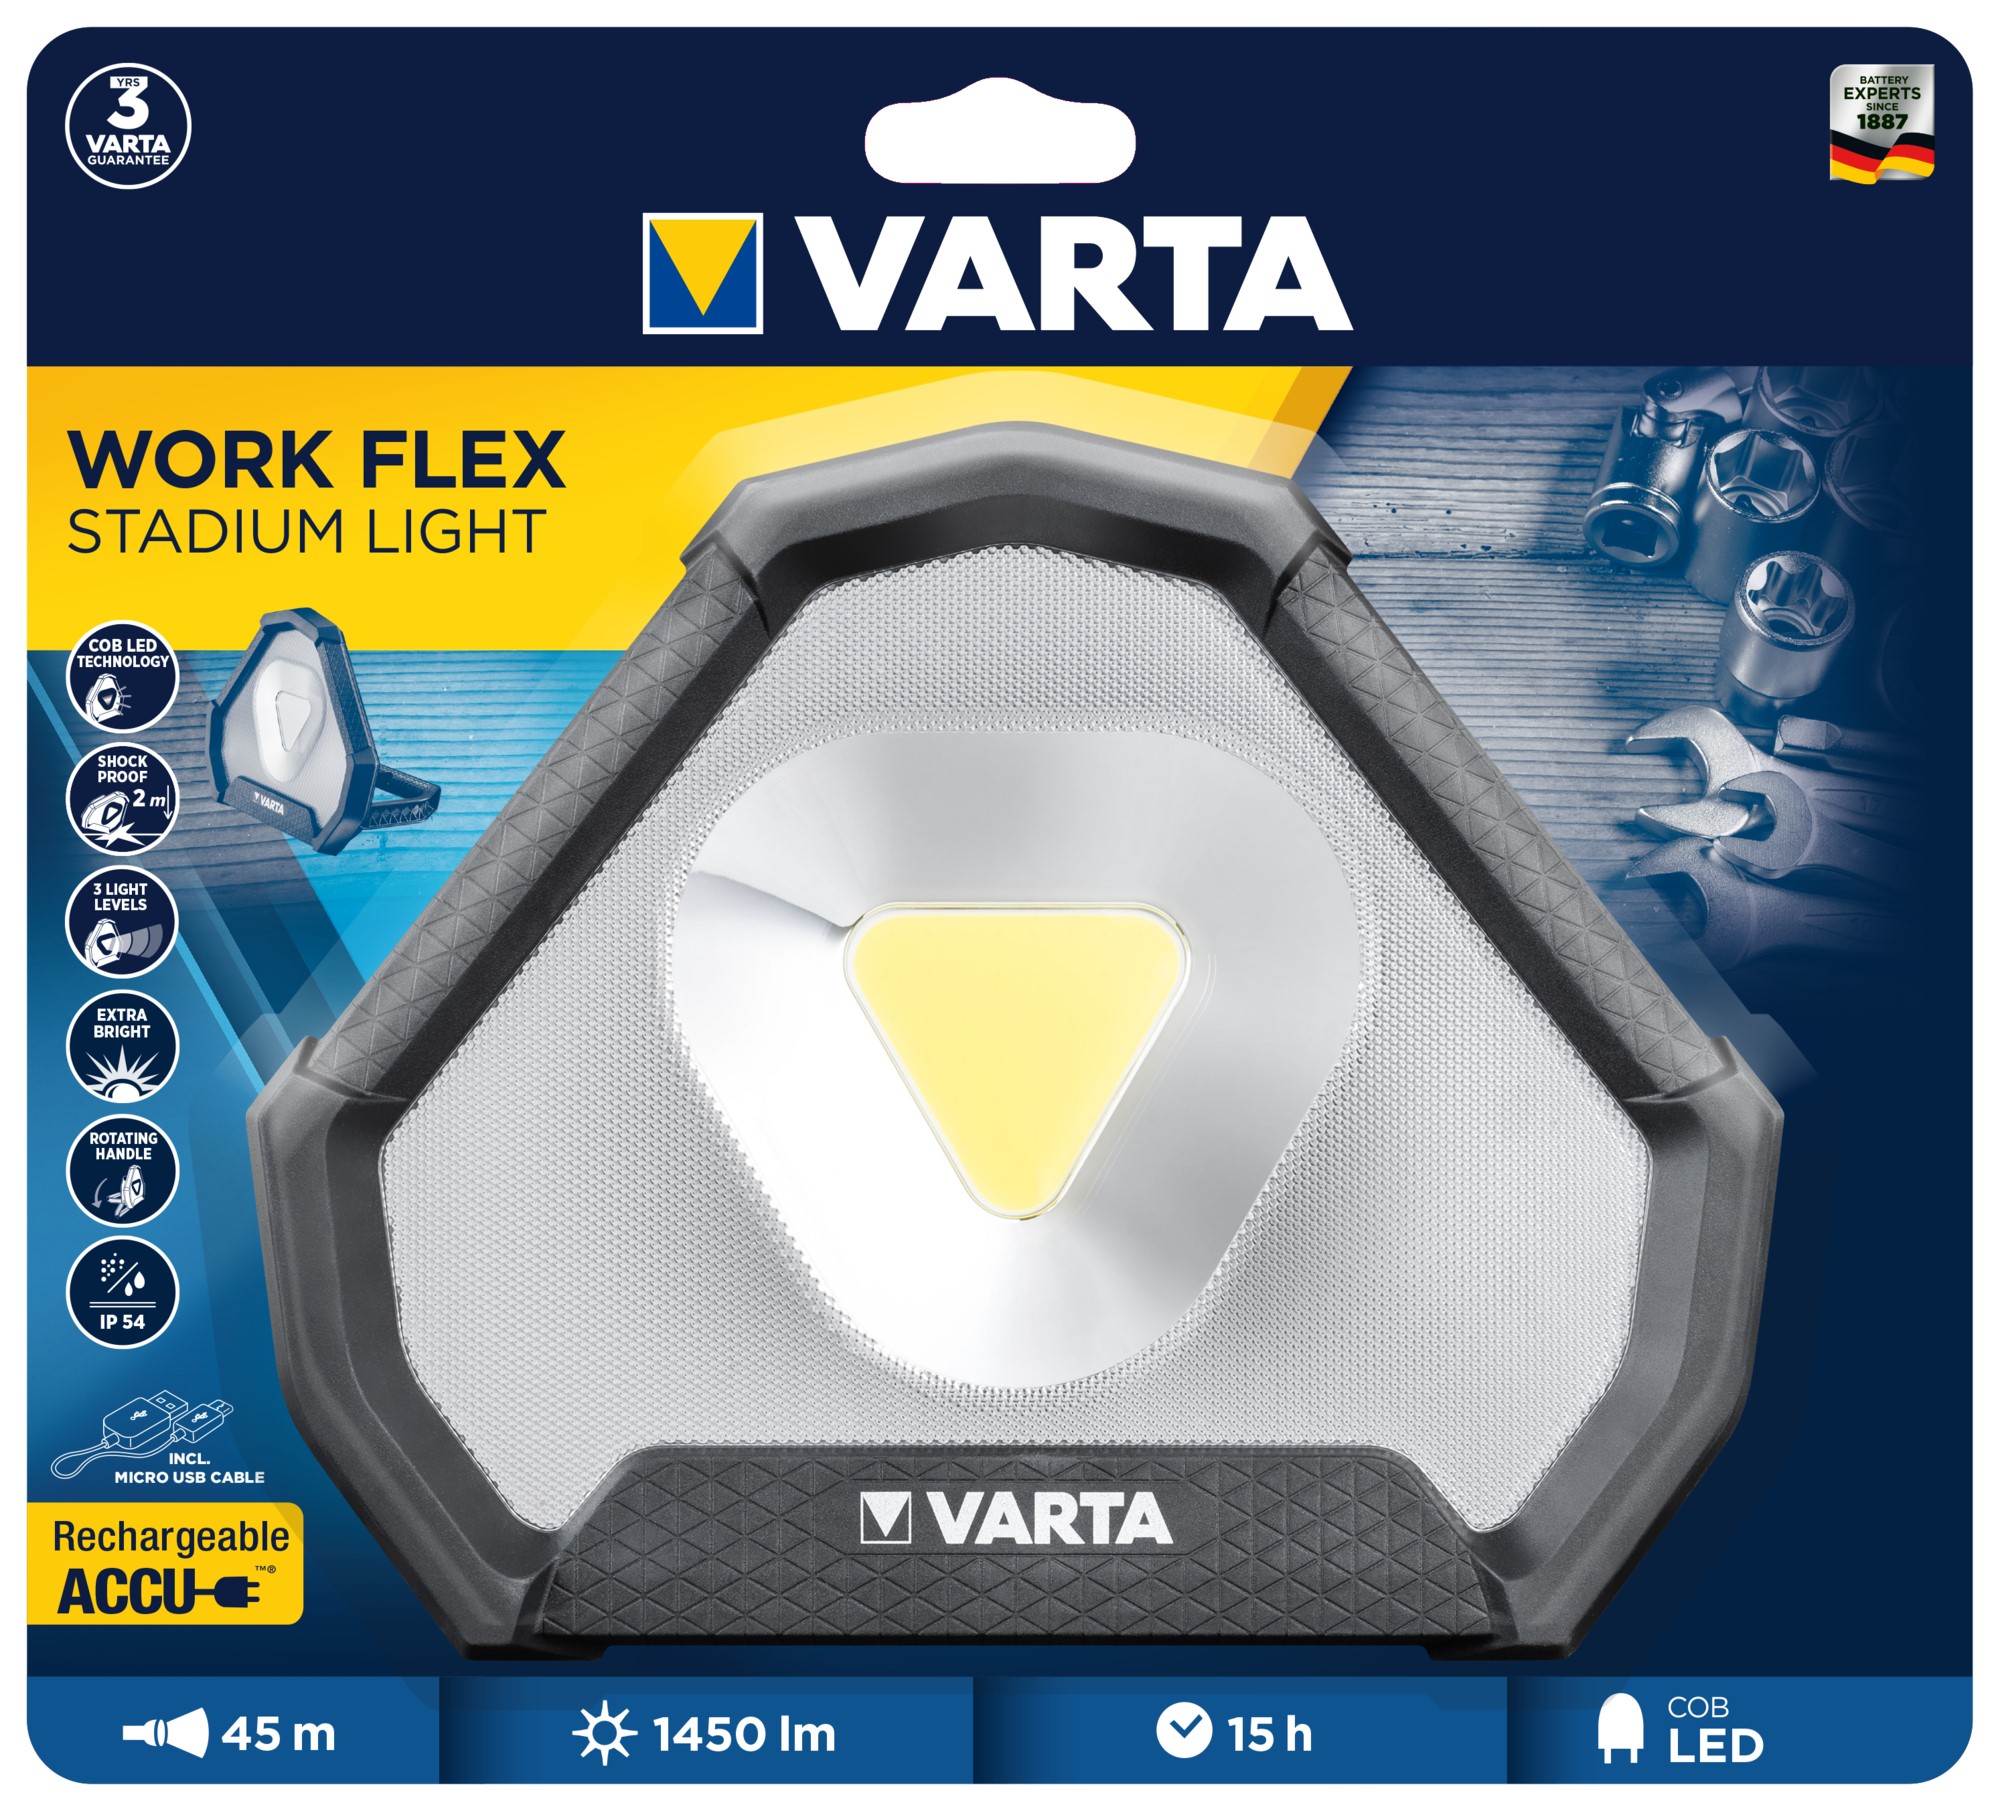 VARTA Projecteur rechargeable 1450 lumens VARTA